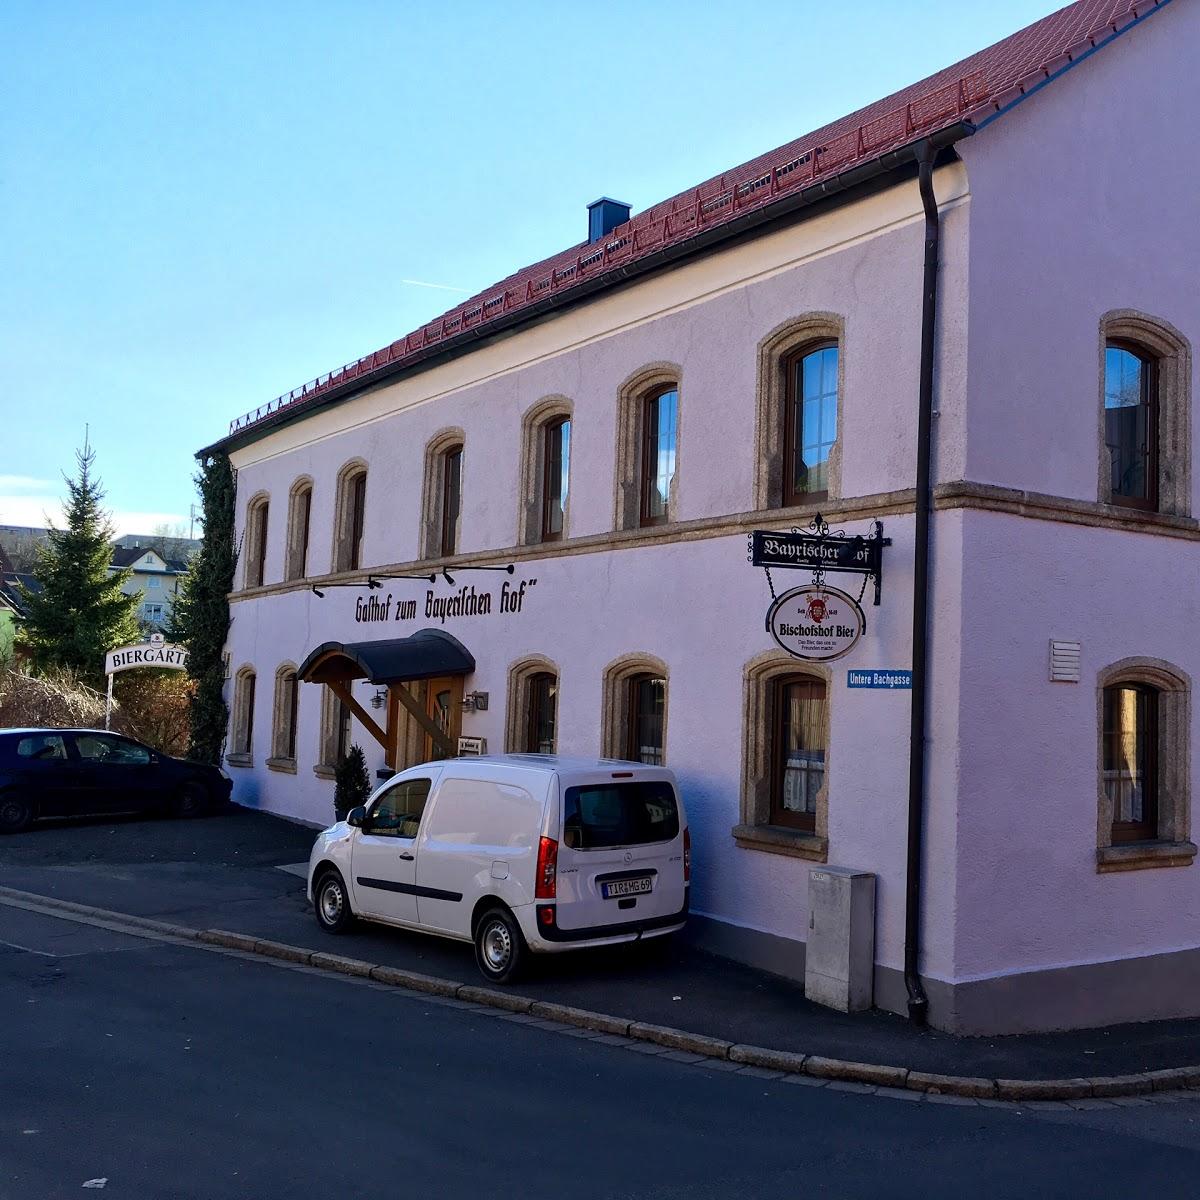 Restaurant "Bayrischer Hof" in Plößberg